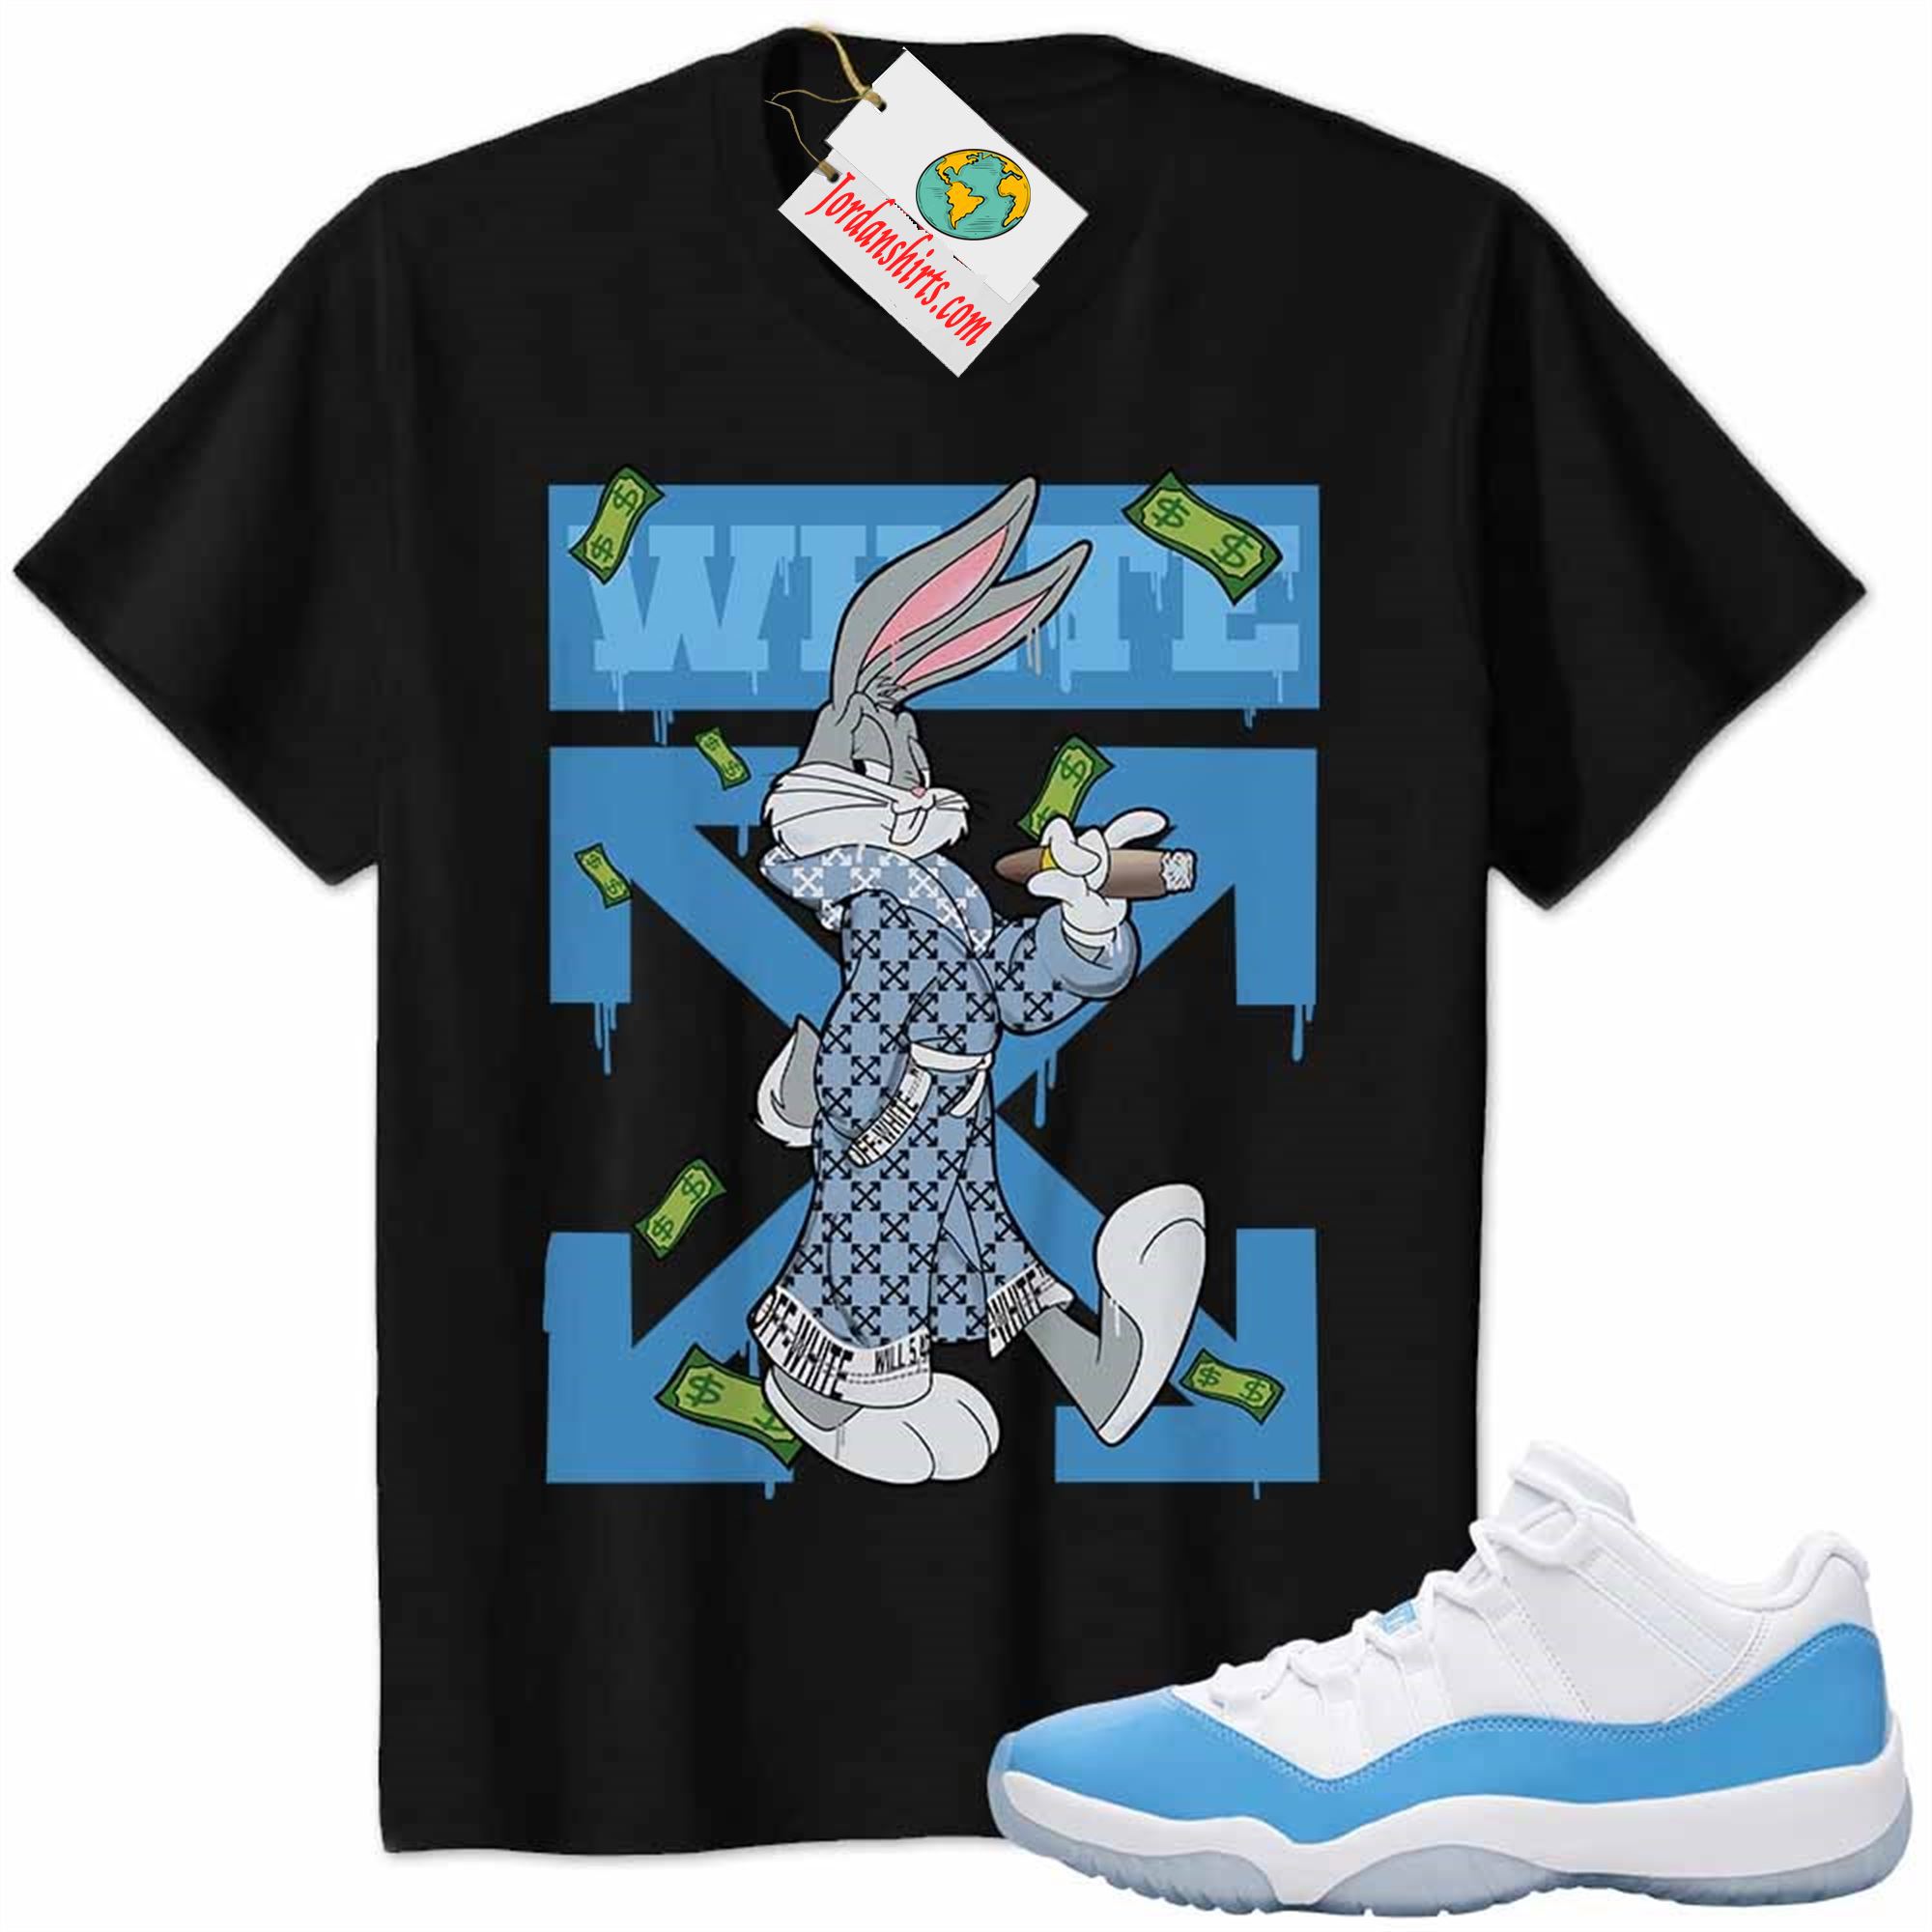 Jordan 11 Shirt, Jordan 11 Unc Shirt Bug Bunny Smokes Weed Money Falling Black Size Up To 5xl